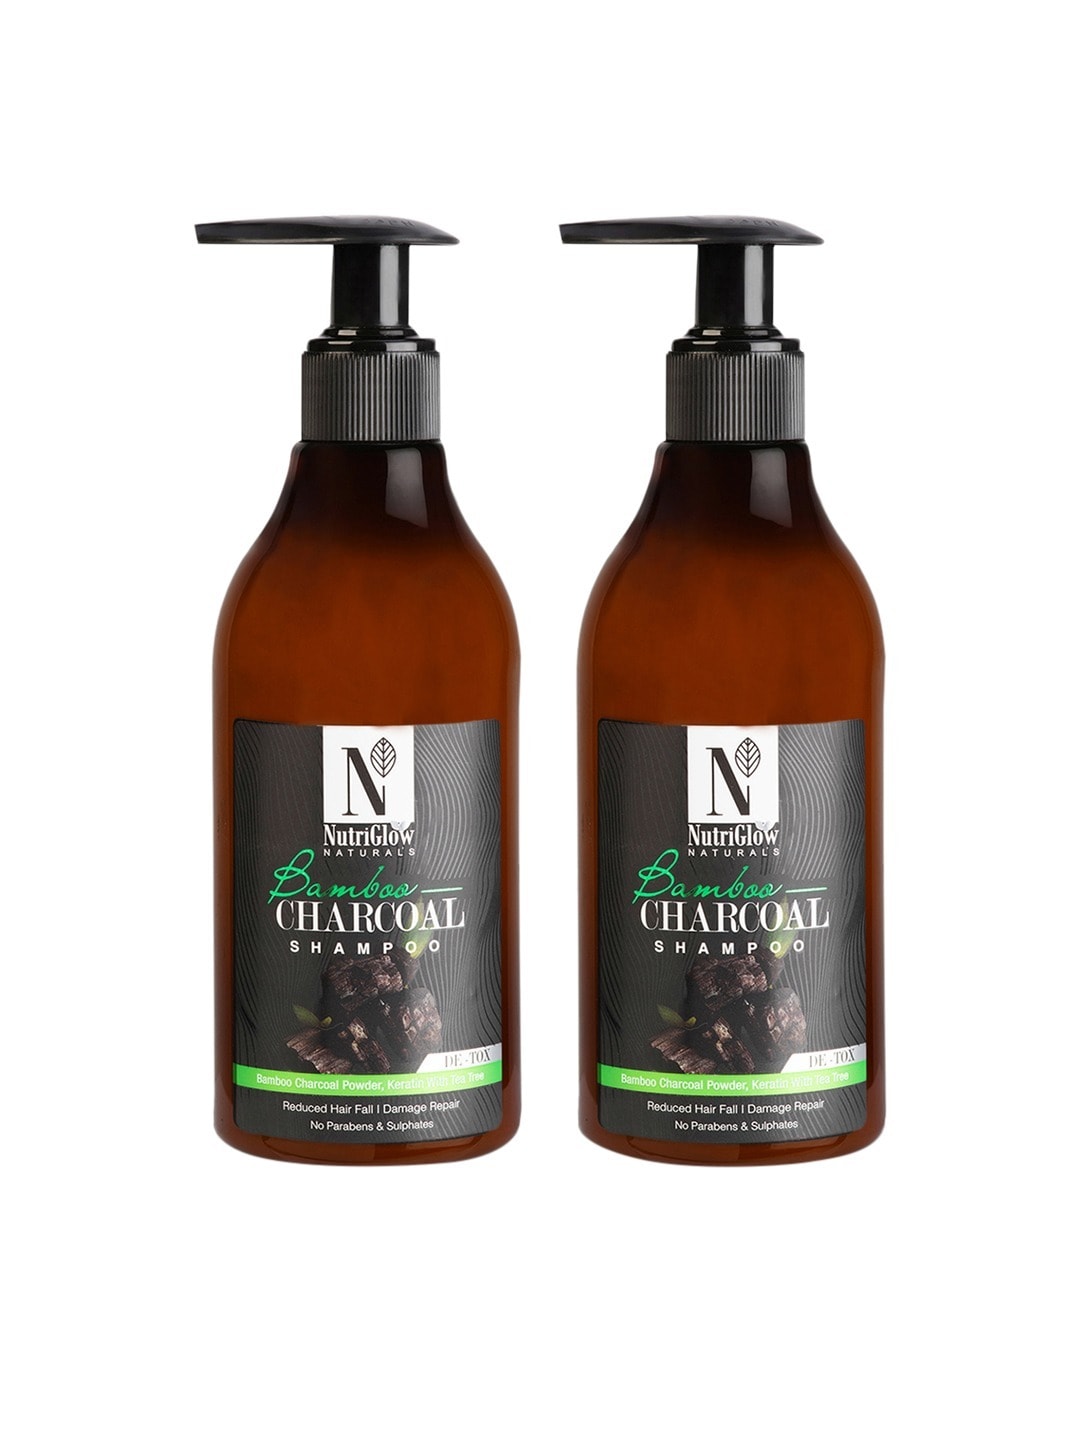 NutriGlow Set of 2 Hair-Fall Damage Repair No Paraben Shampoo 300 ml each Price in India